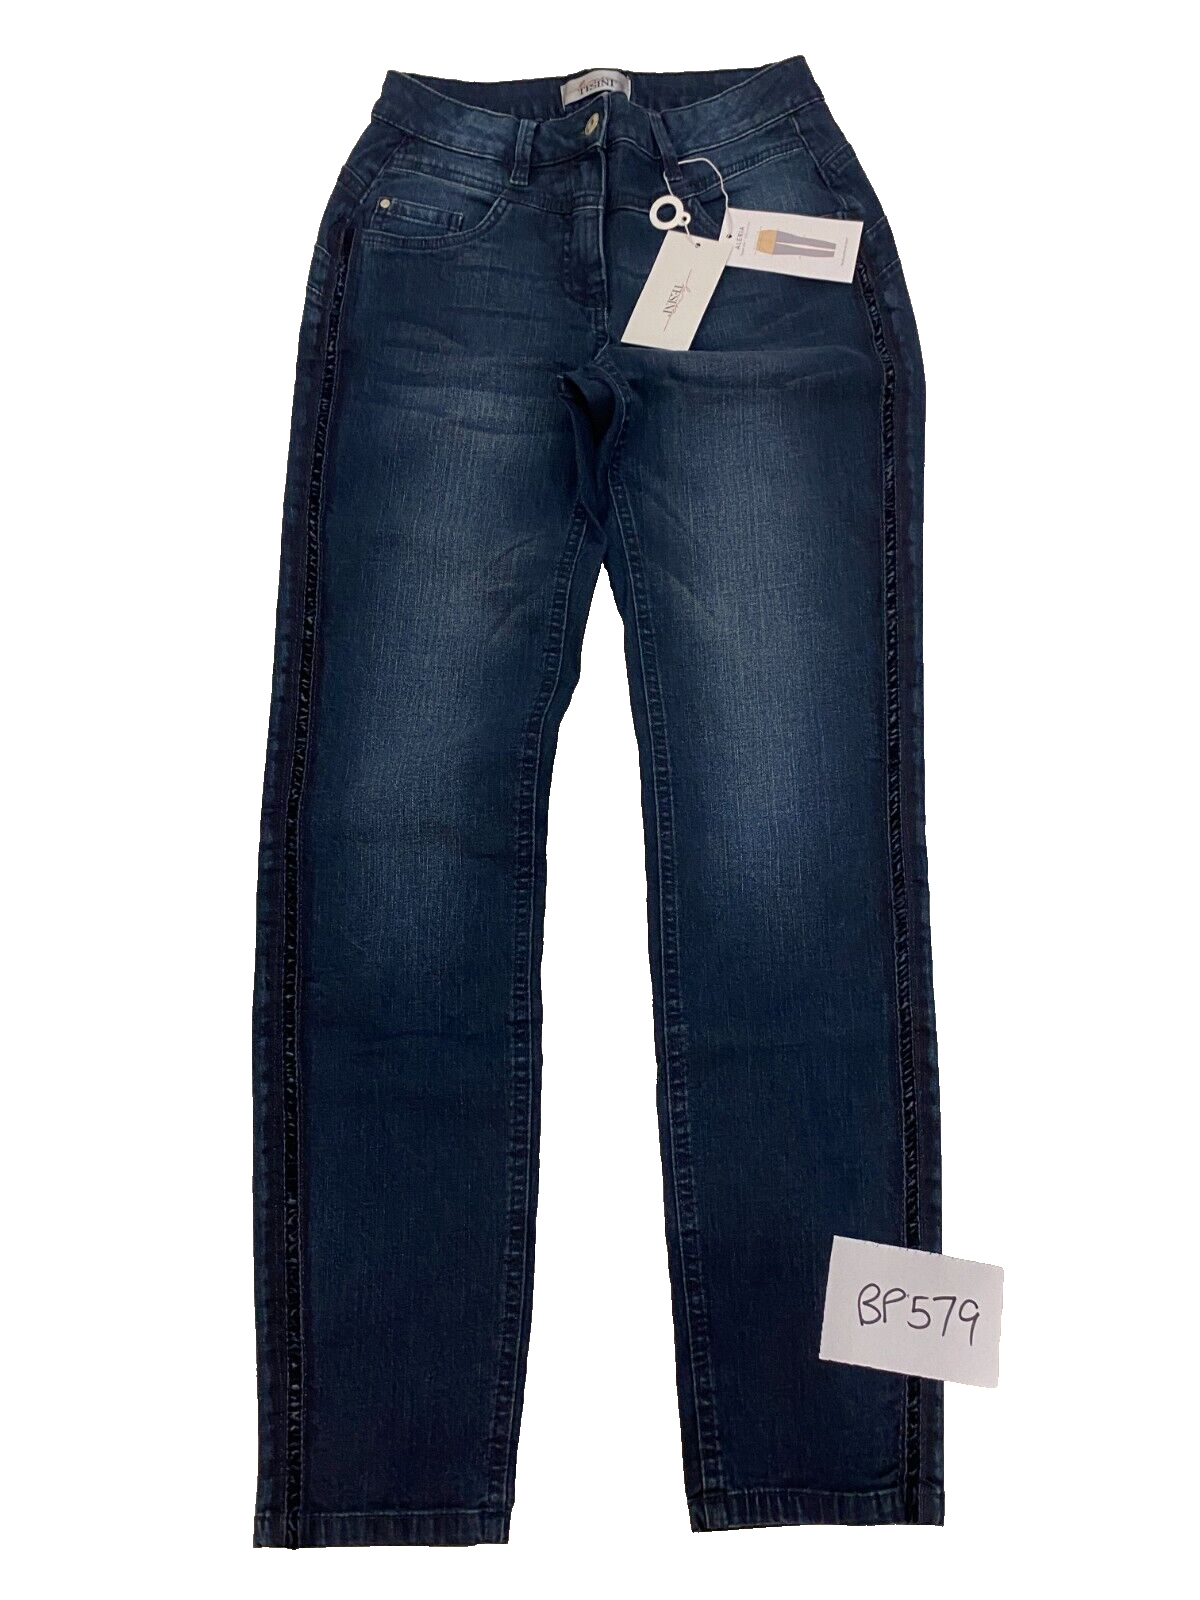 Jeans Linea and Kaleidoscope @ Tesini 50 Slim items similar Fit